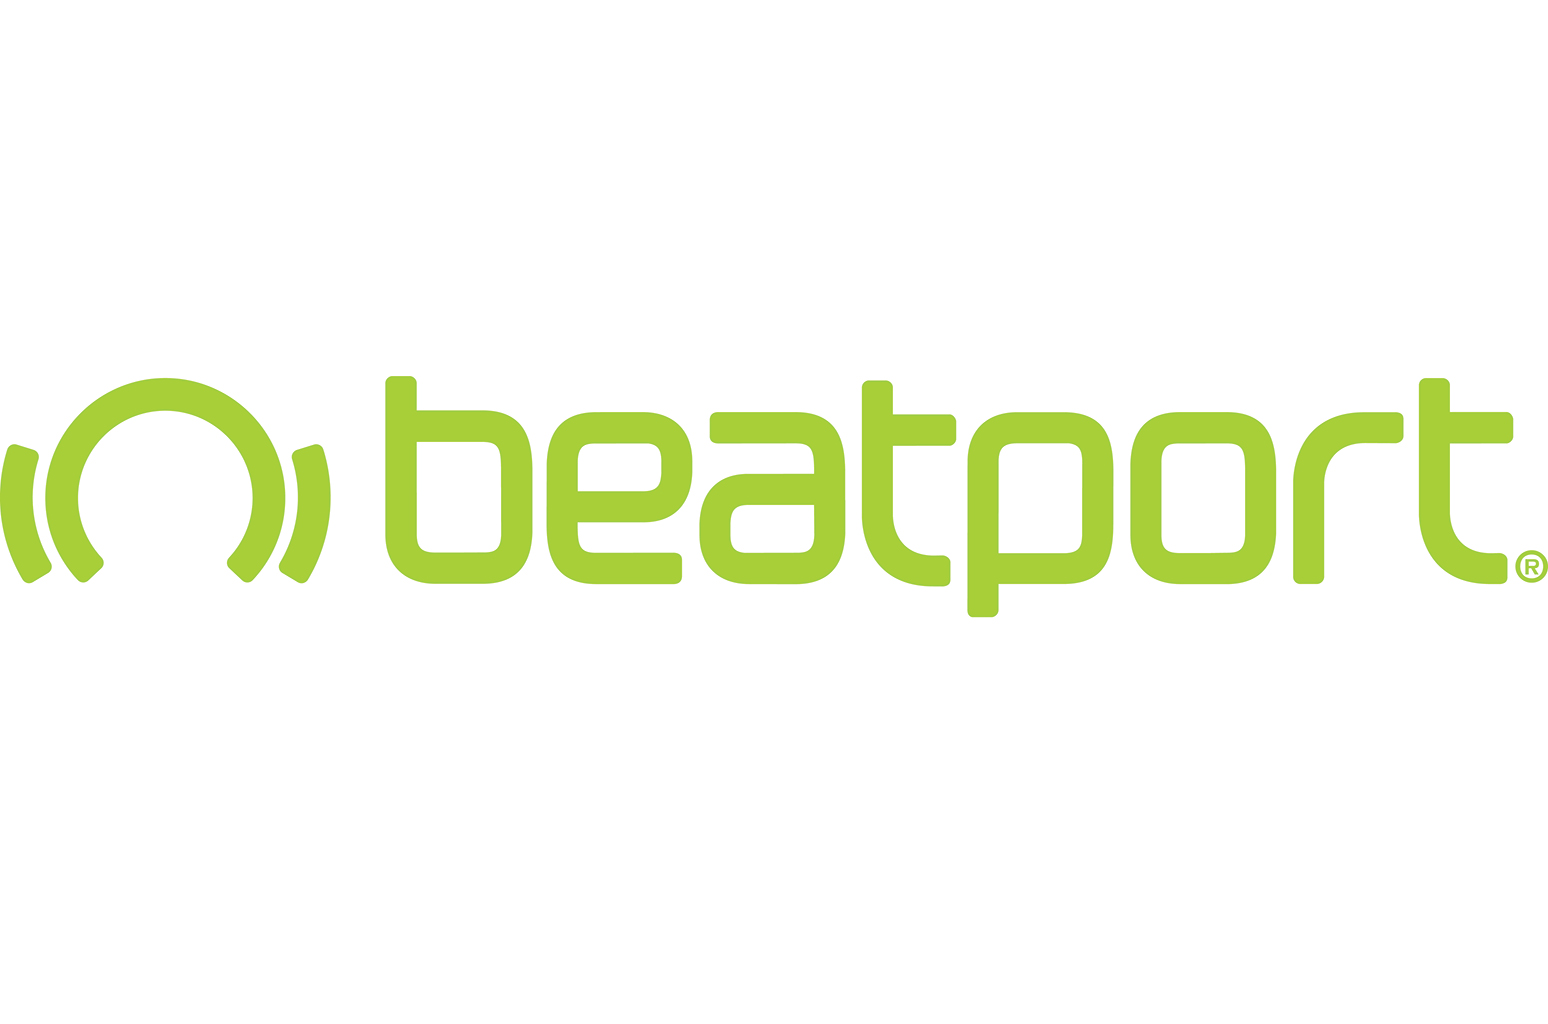 beatport-logo-w-2018-billboard-1548.jpg